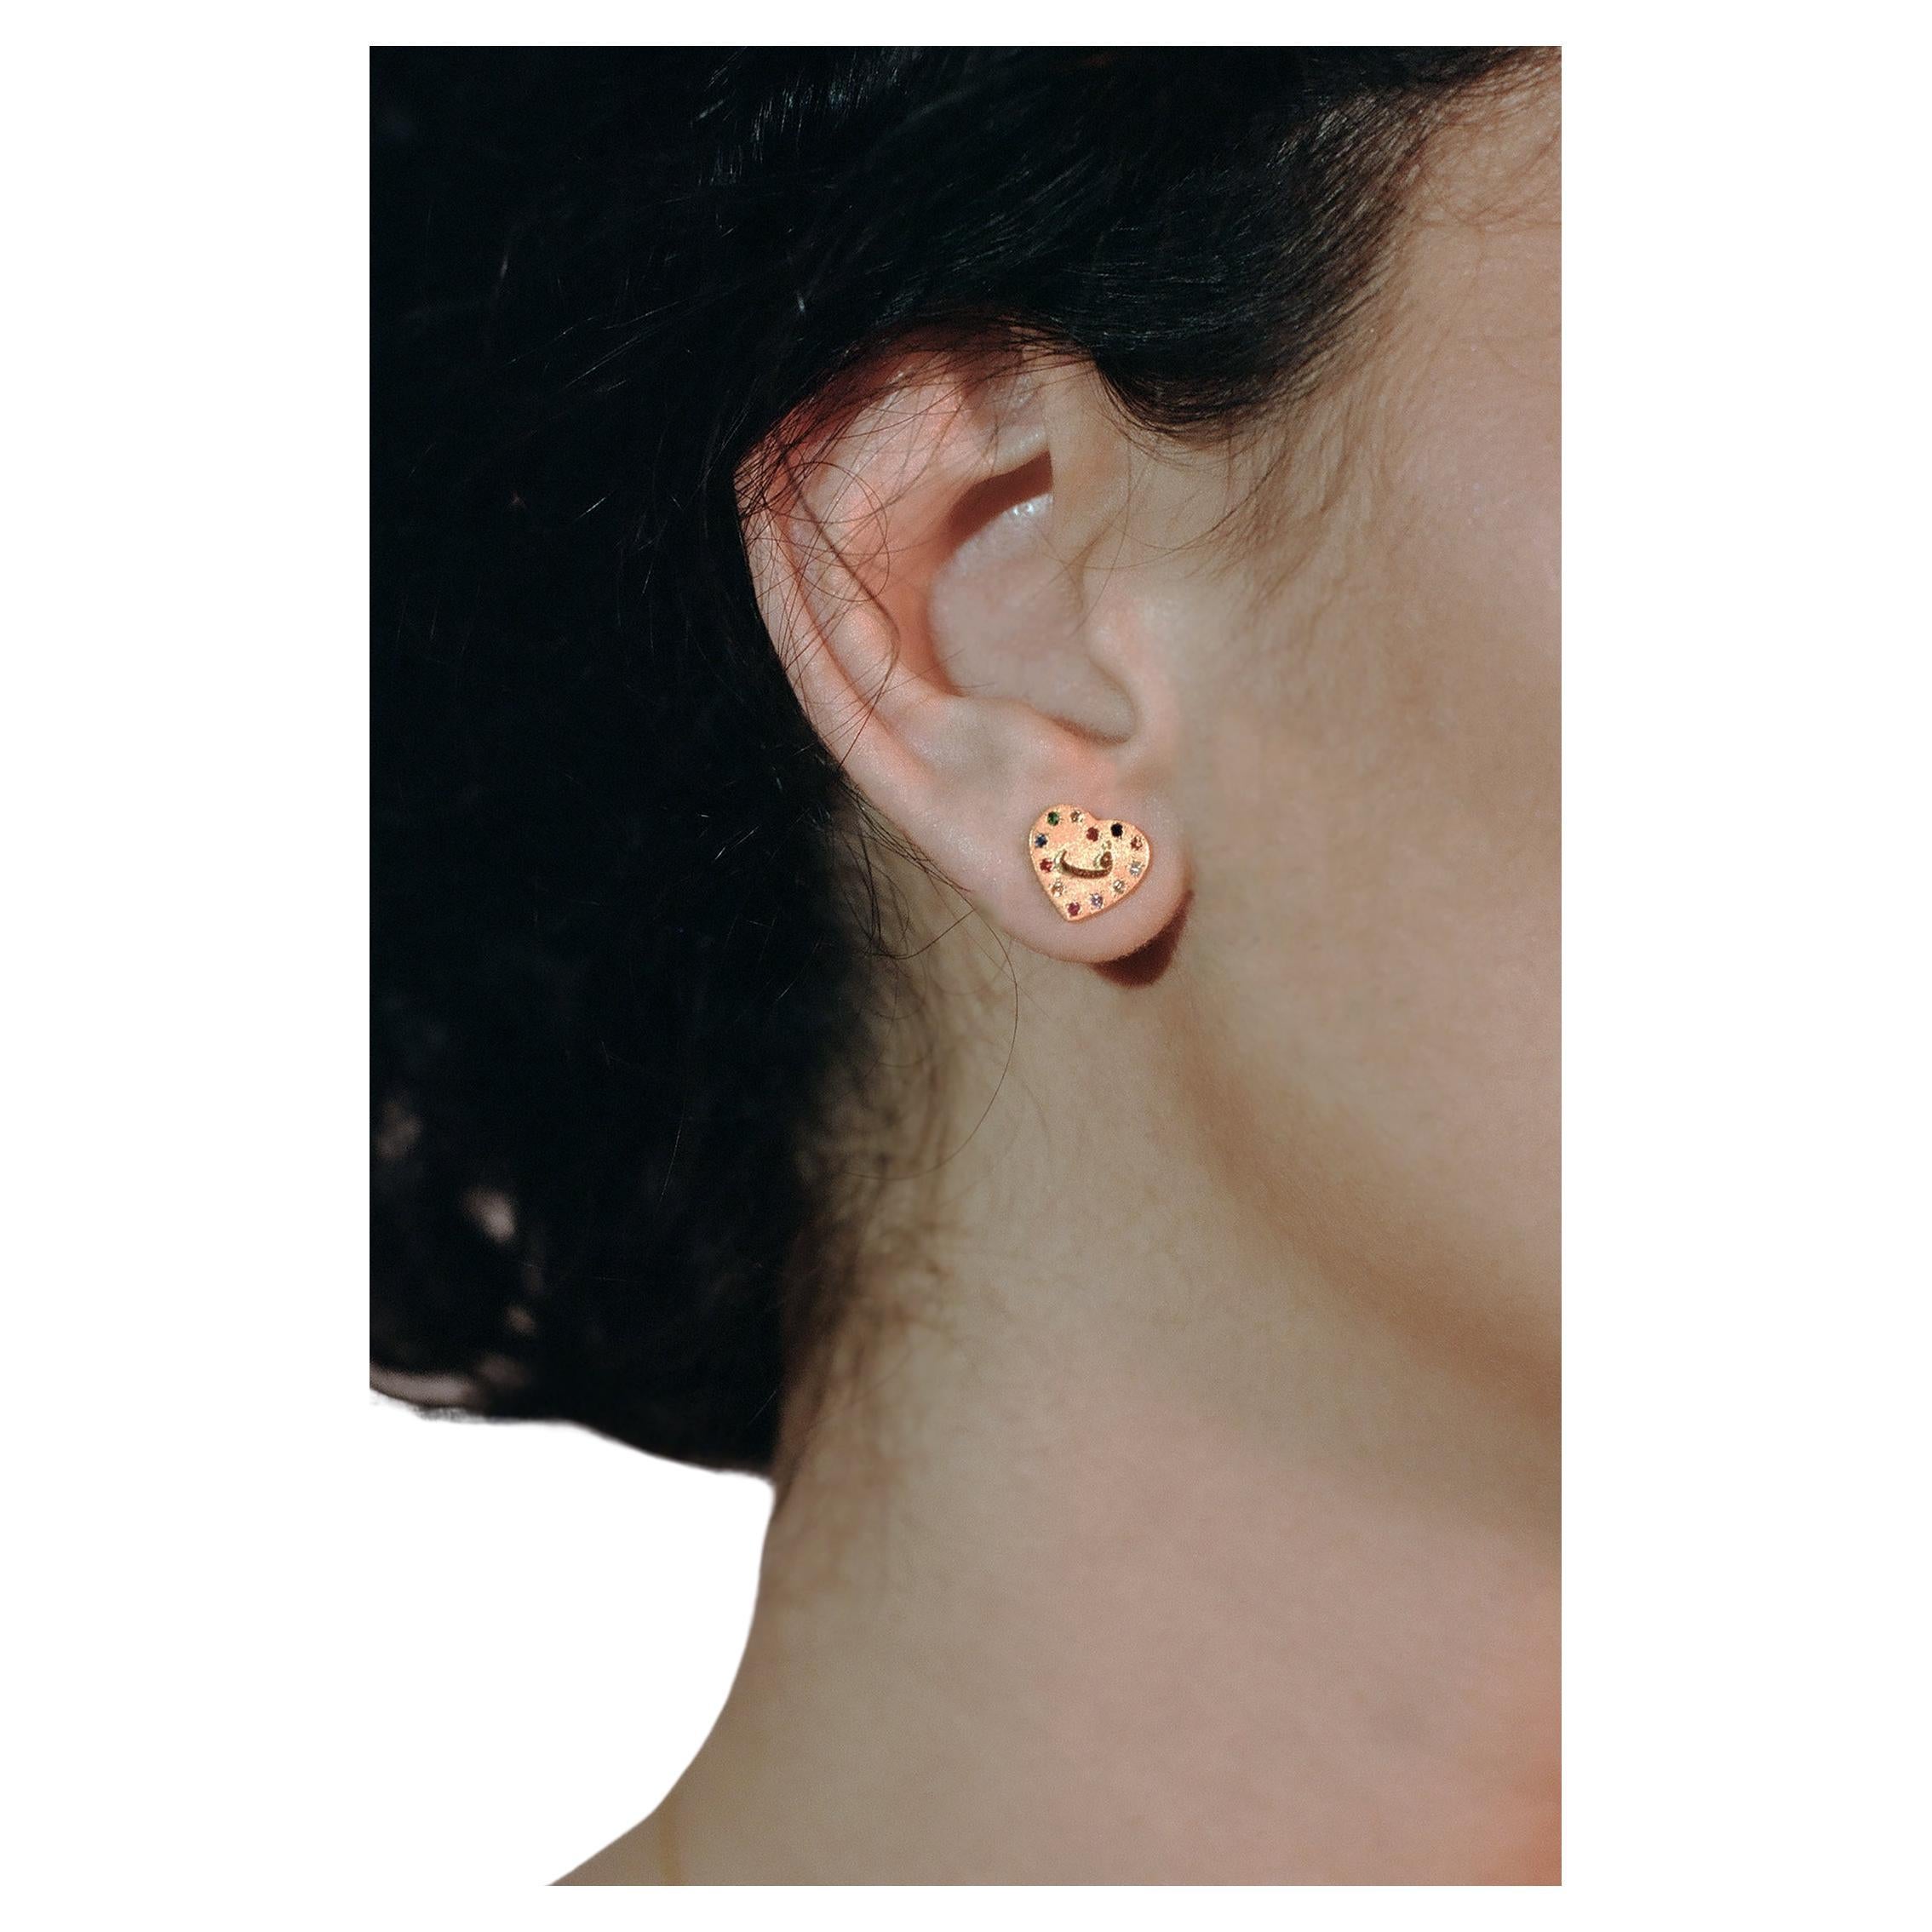 Heart shaped white Gold adjustable Earrings.